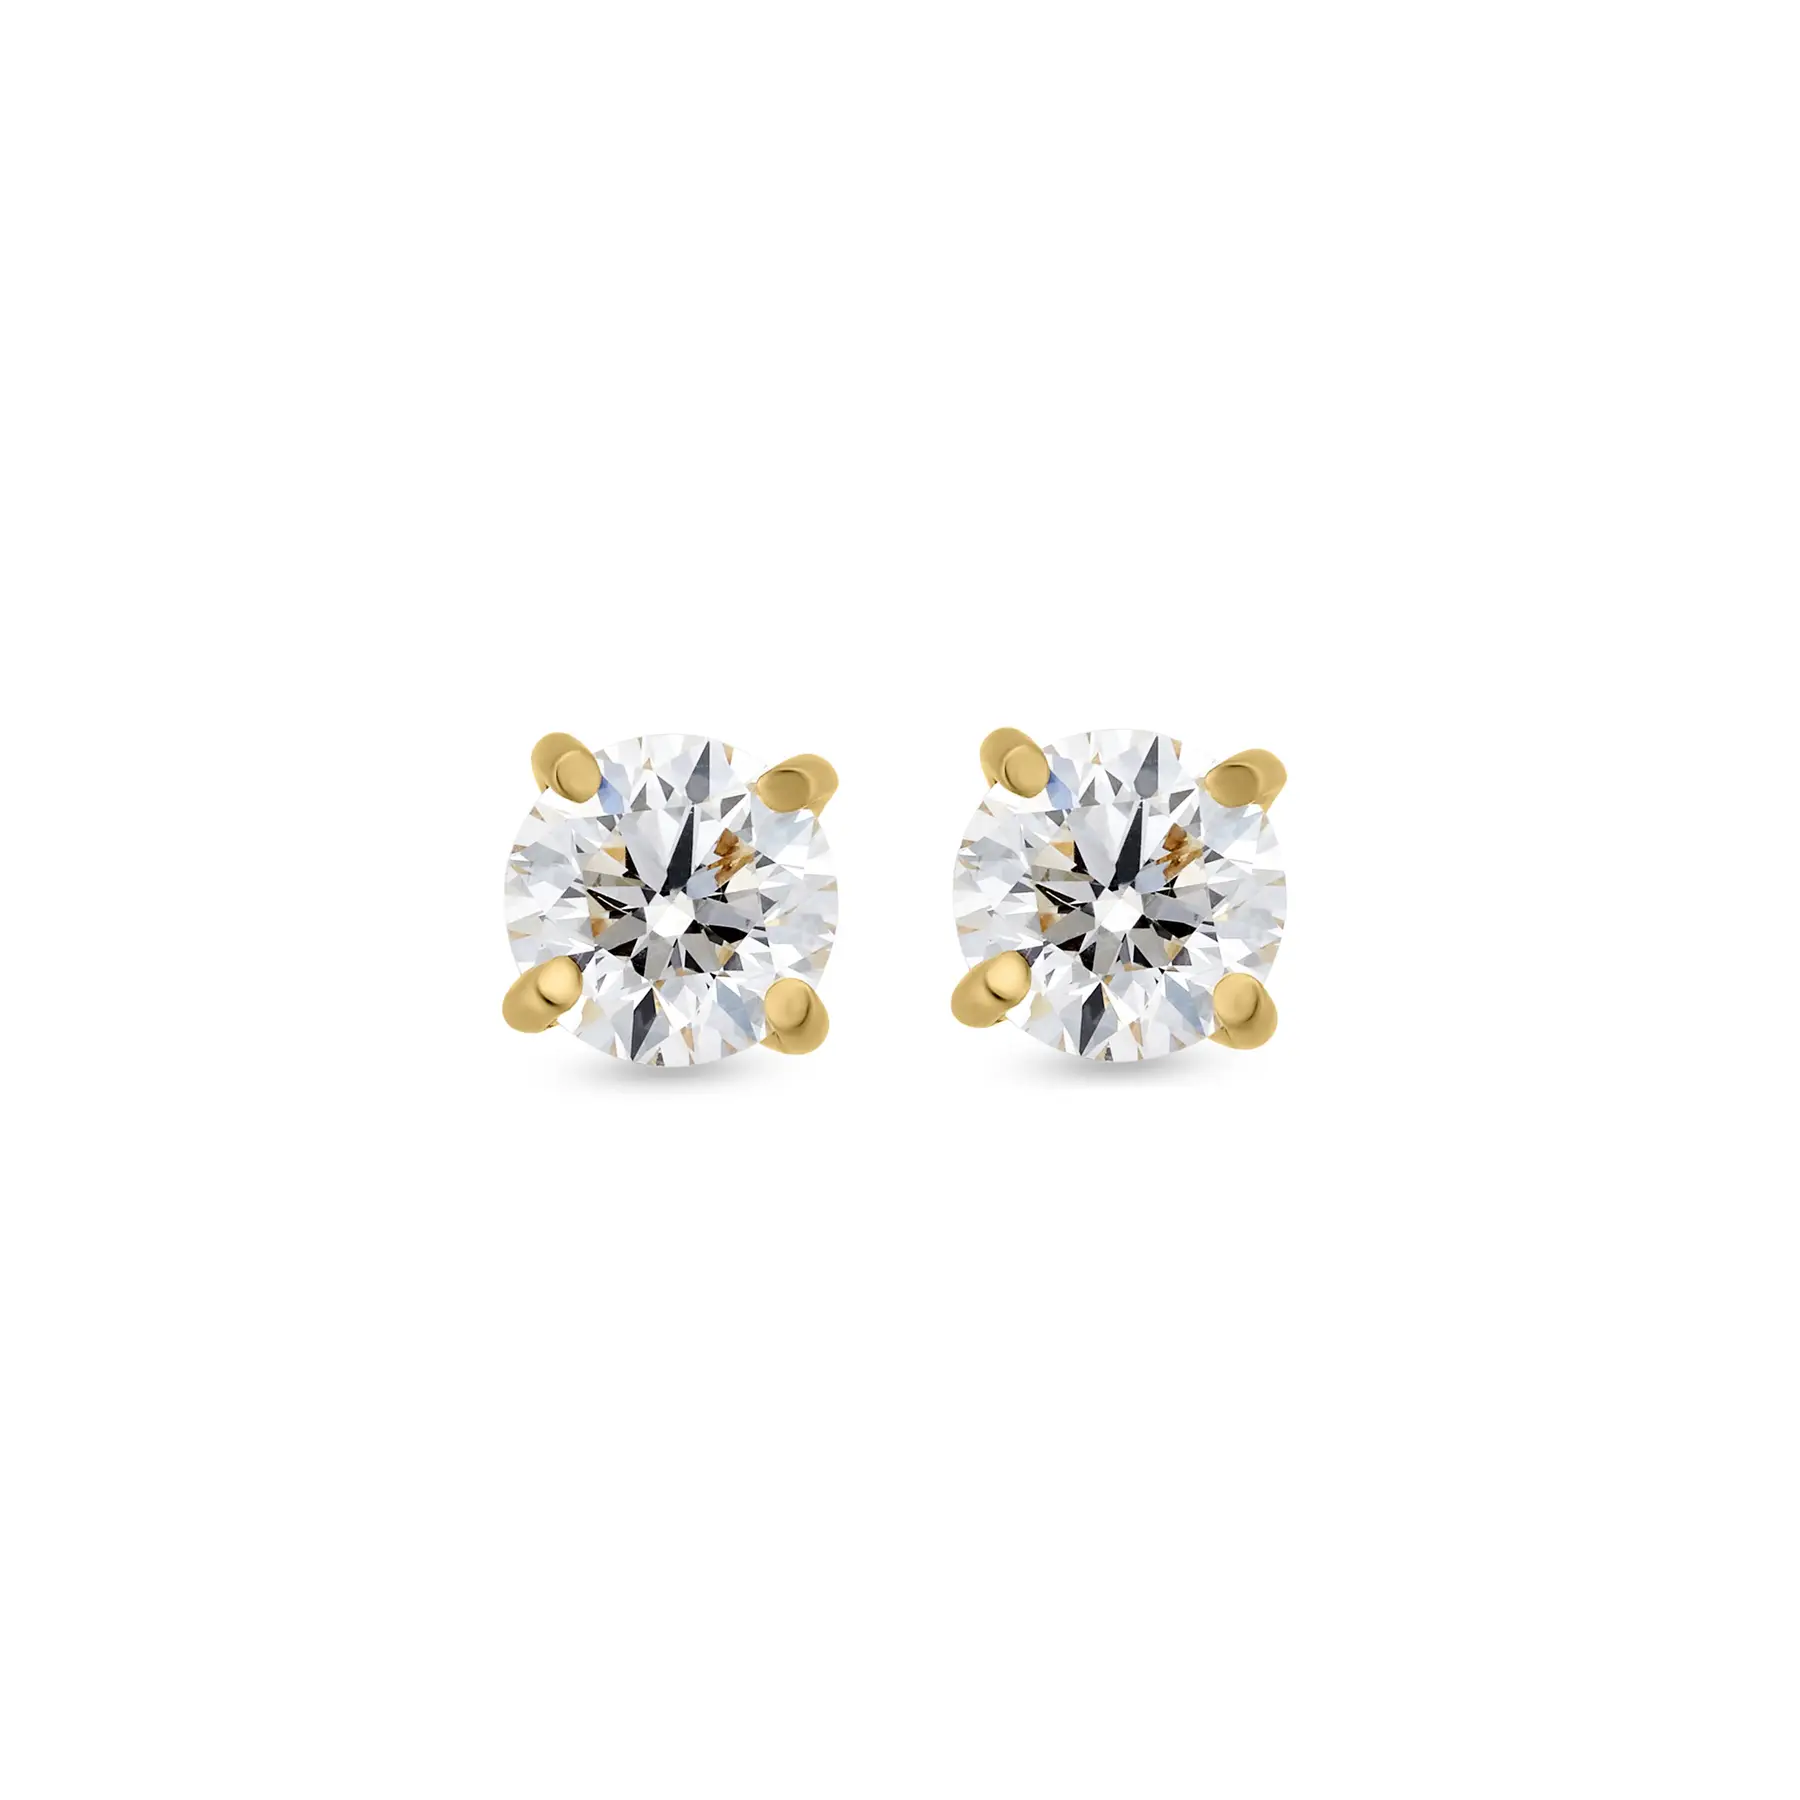 60372 18k yellow gold 0.82 ct. tw. diamond stud earrings 38730289843971